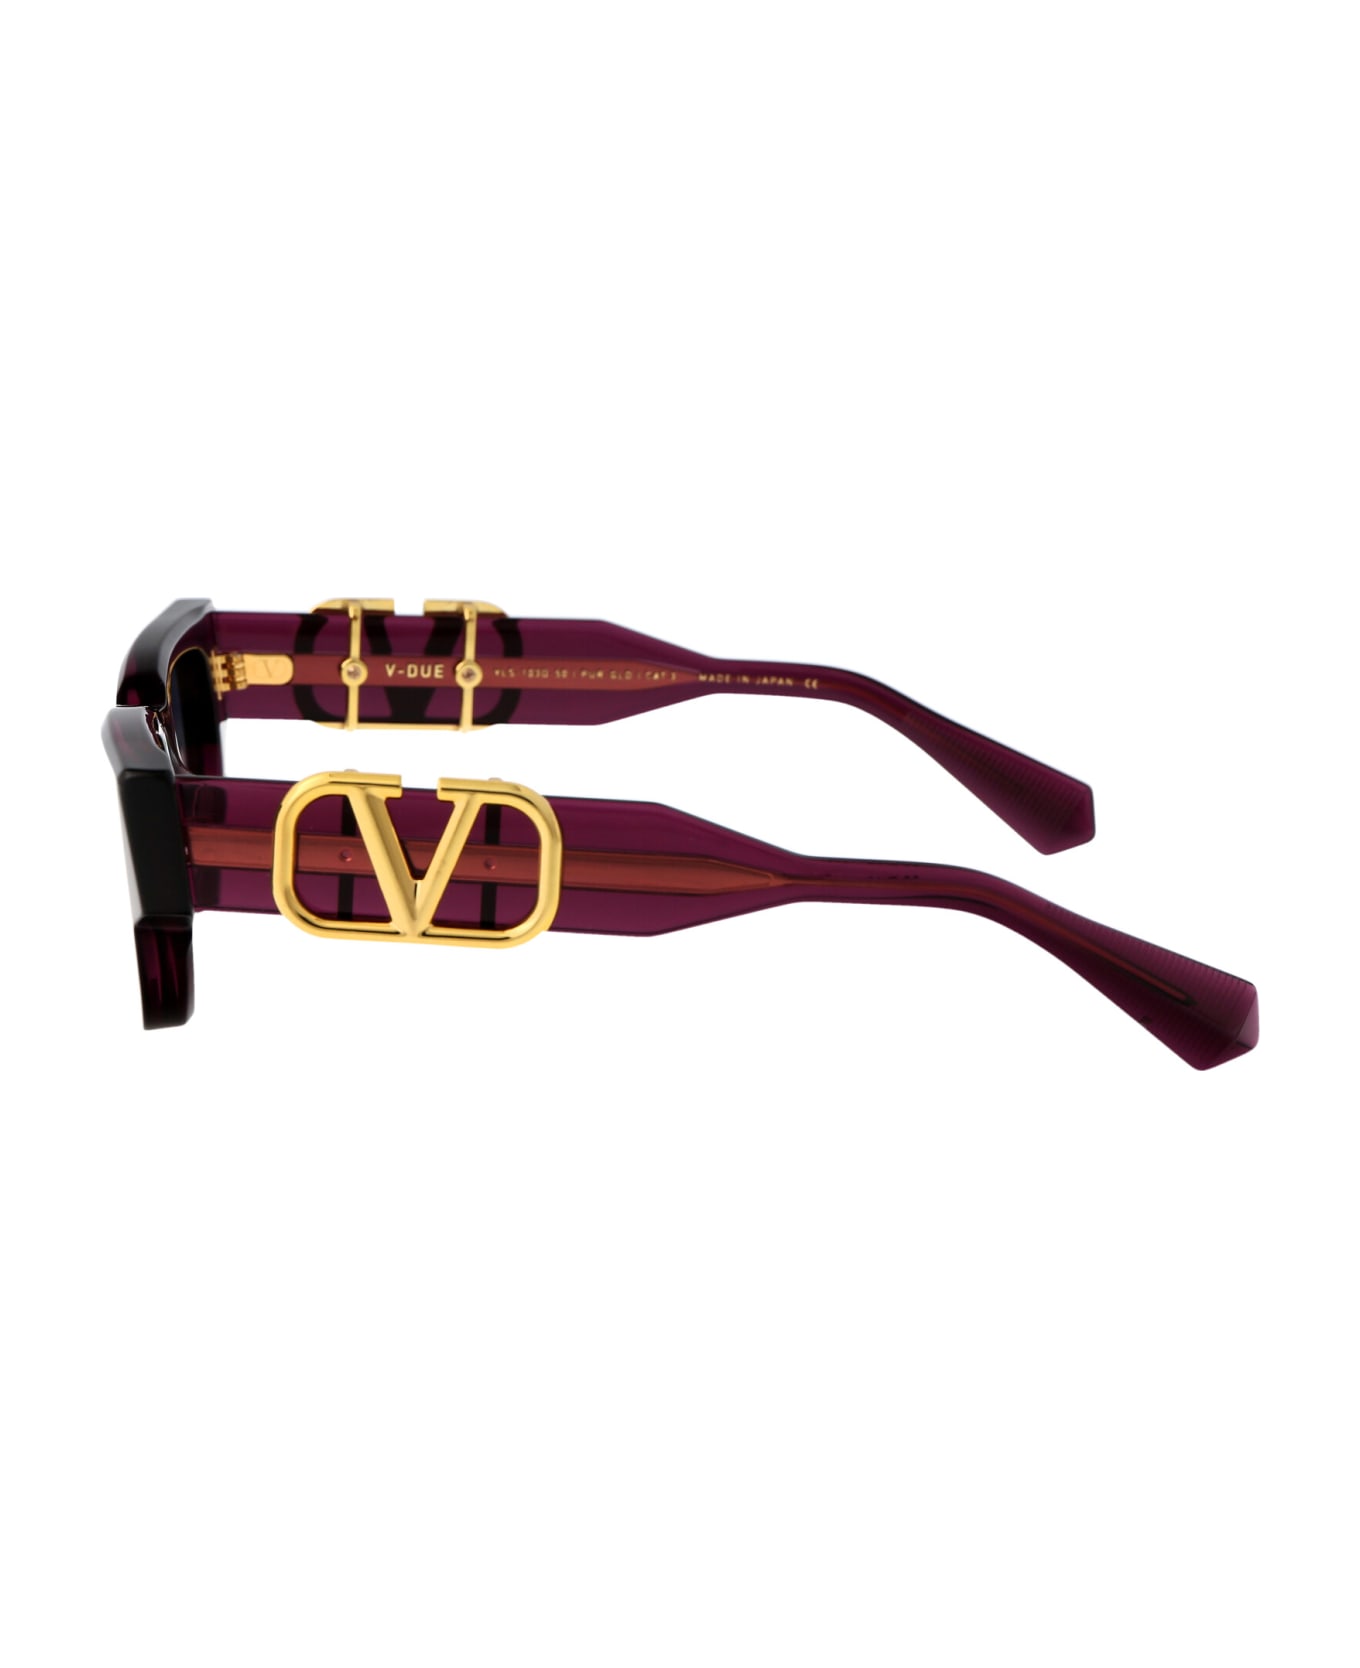 Valentino Eyewear V - Due Sunglasses - 103D PUR - GLD サングラス